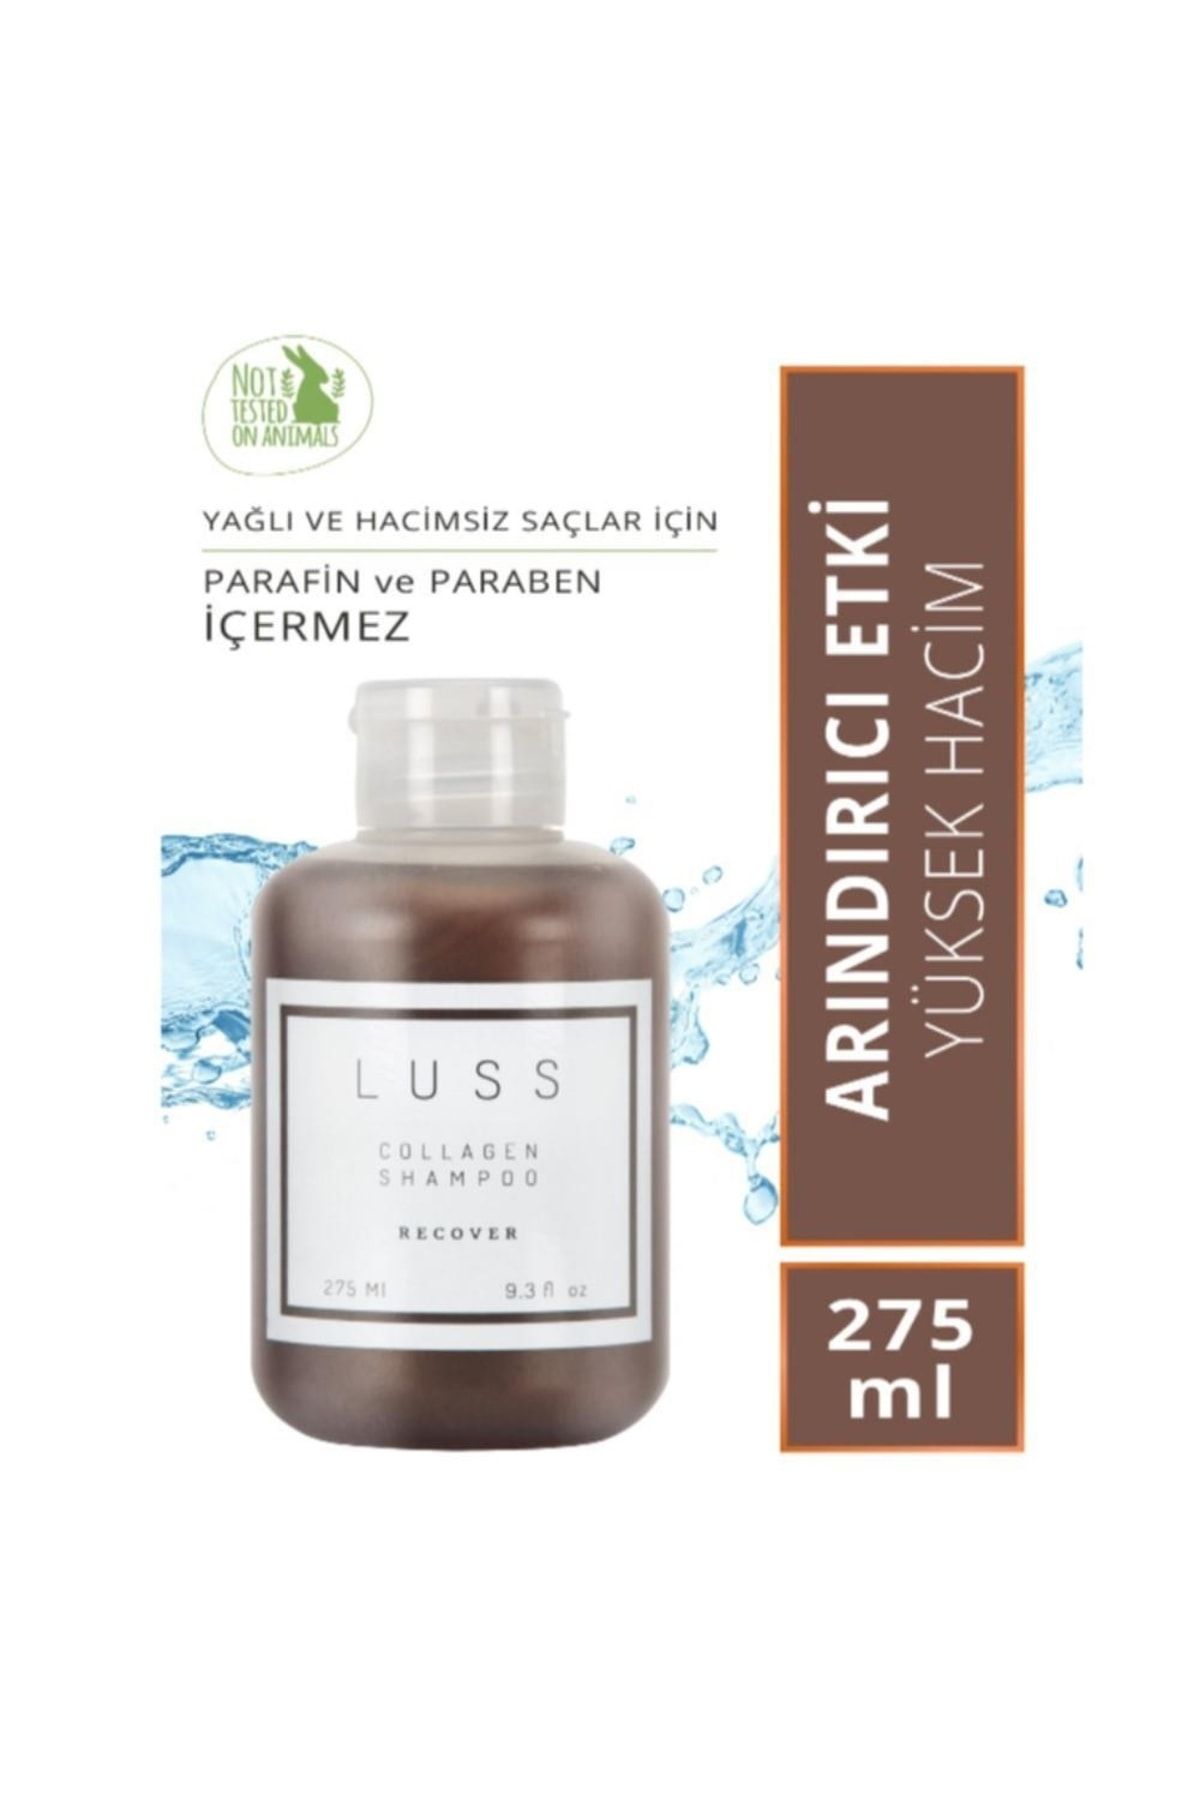 LUSS Collagen Shampoo - Dökülme Önleyici 50003 - 275ml